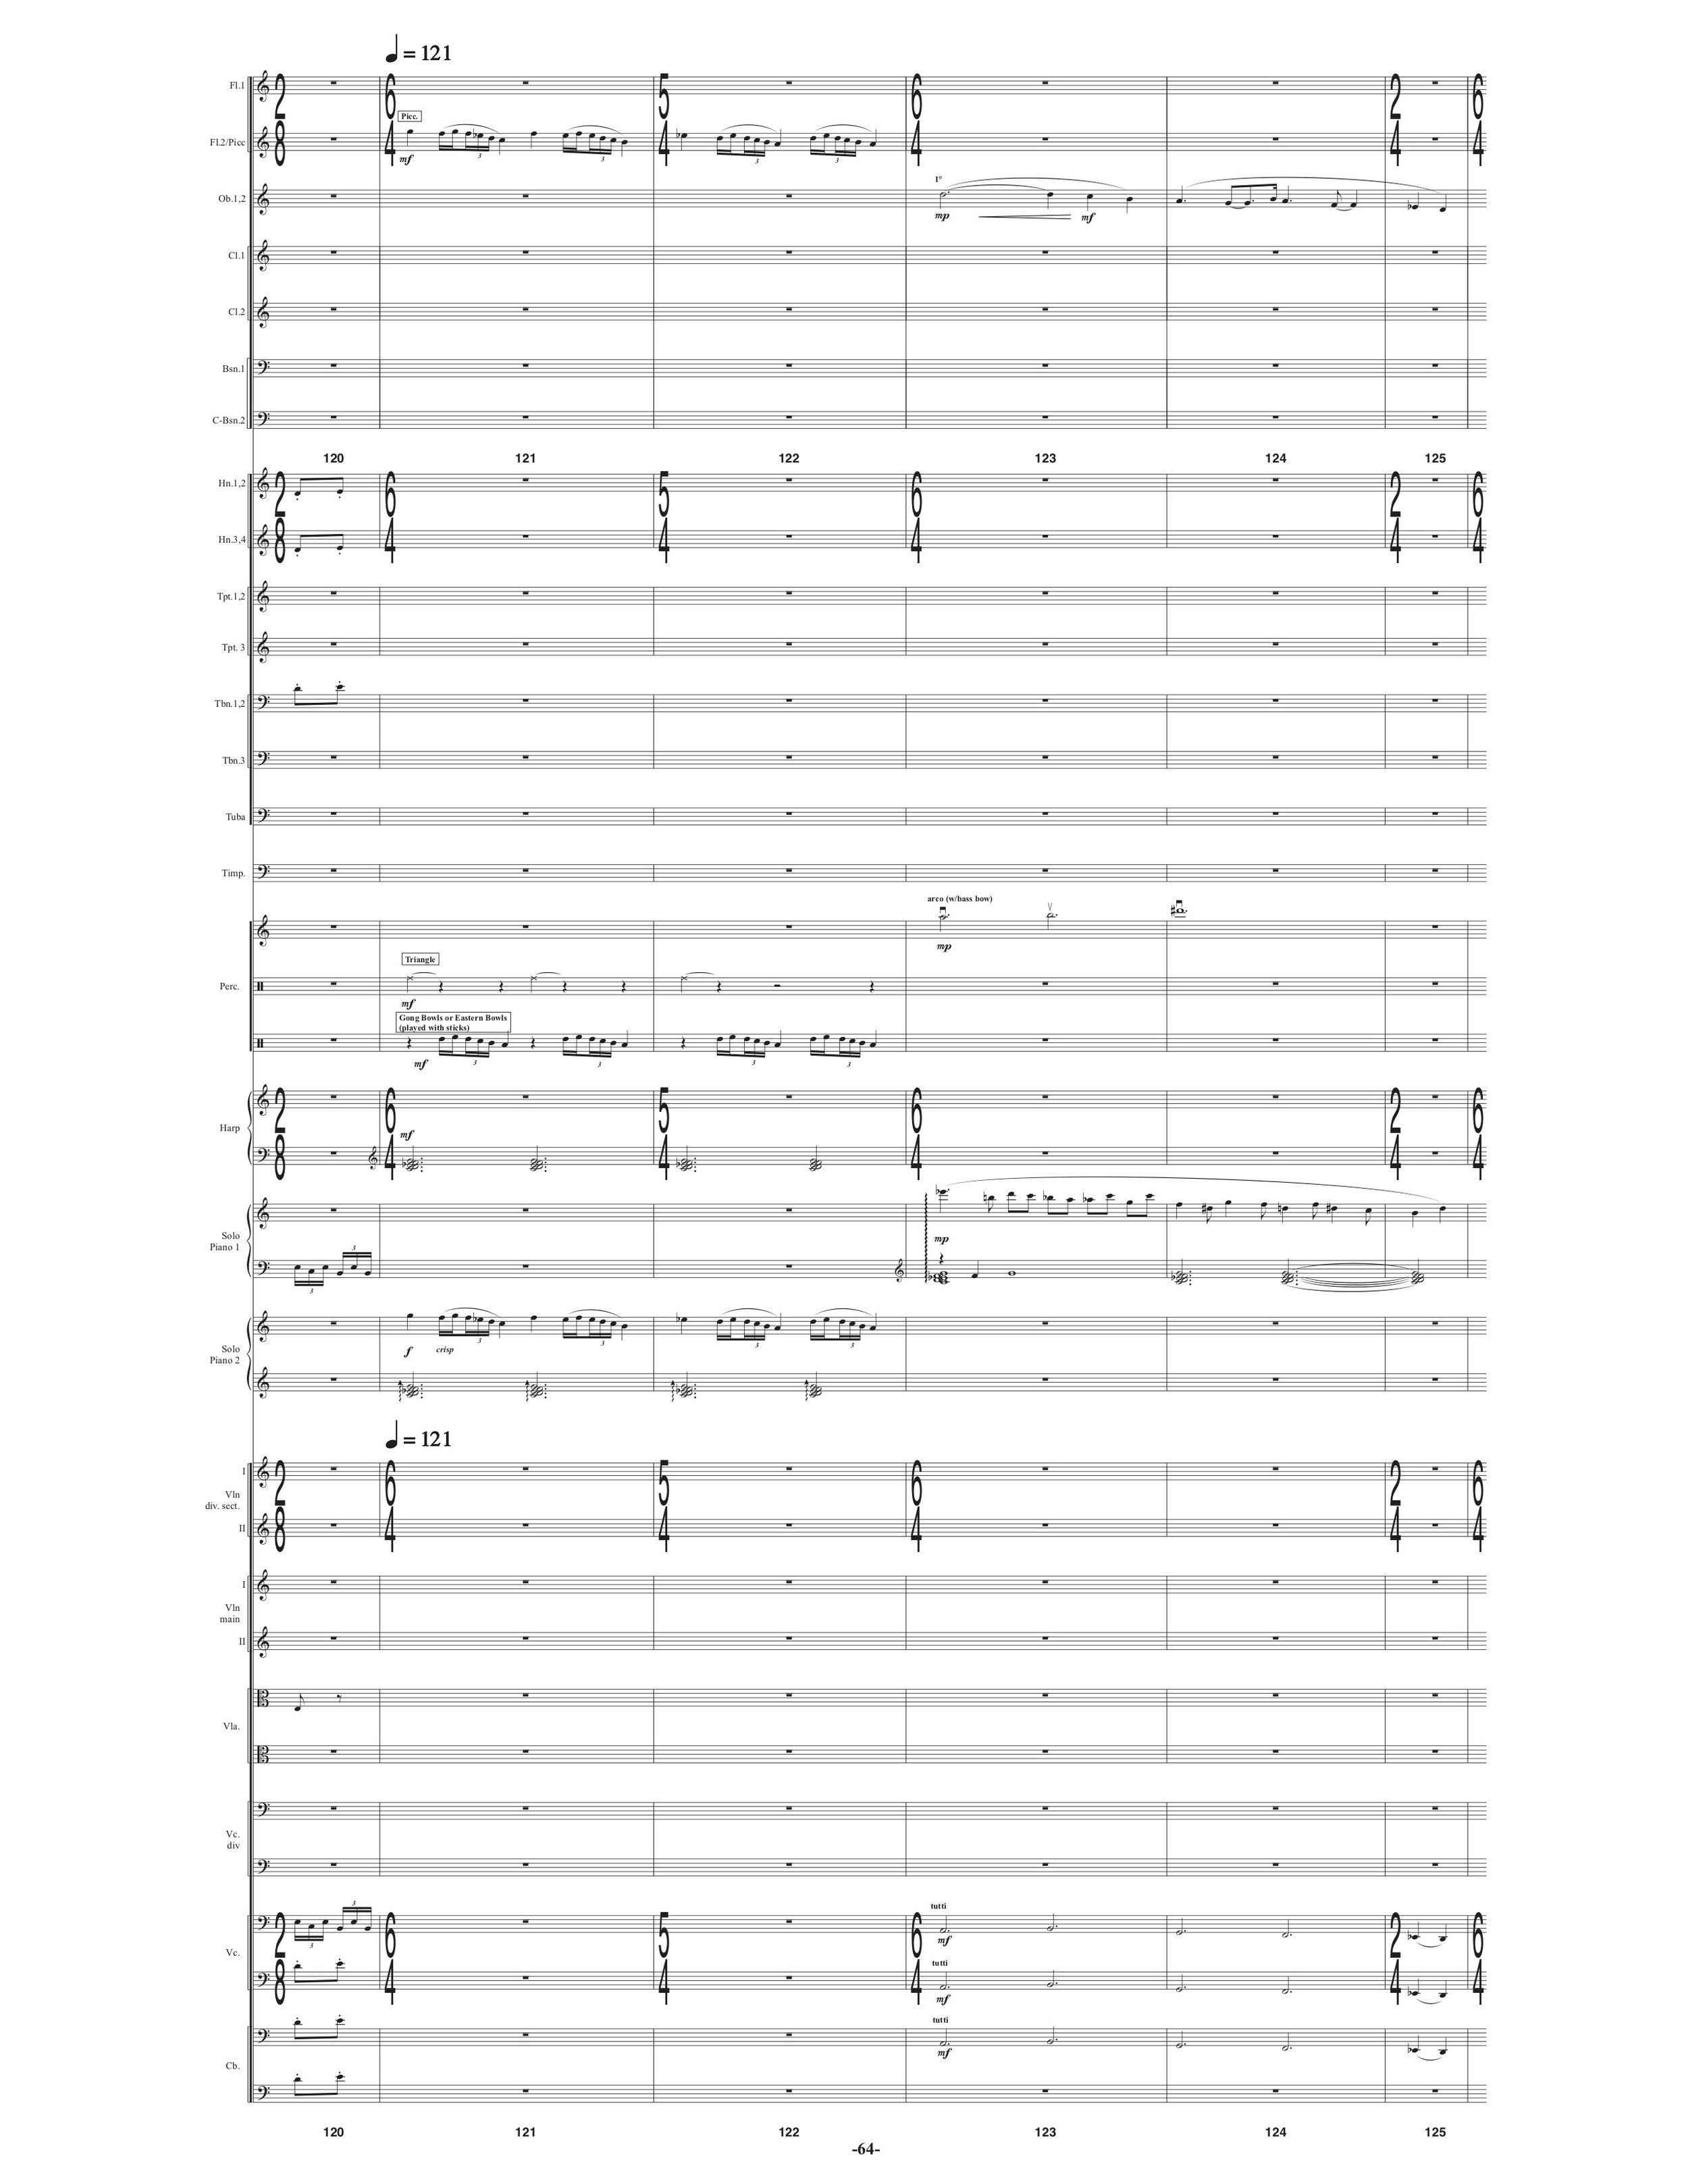 Symphony_Orch & 2 Pianos p69.jpg